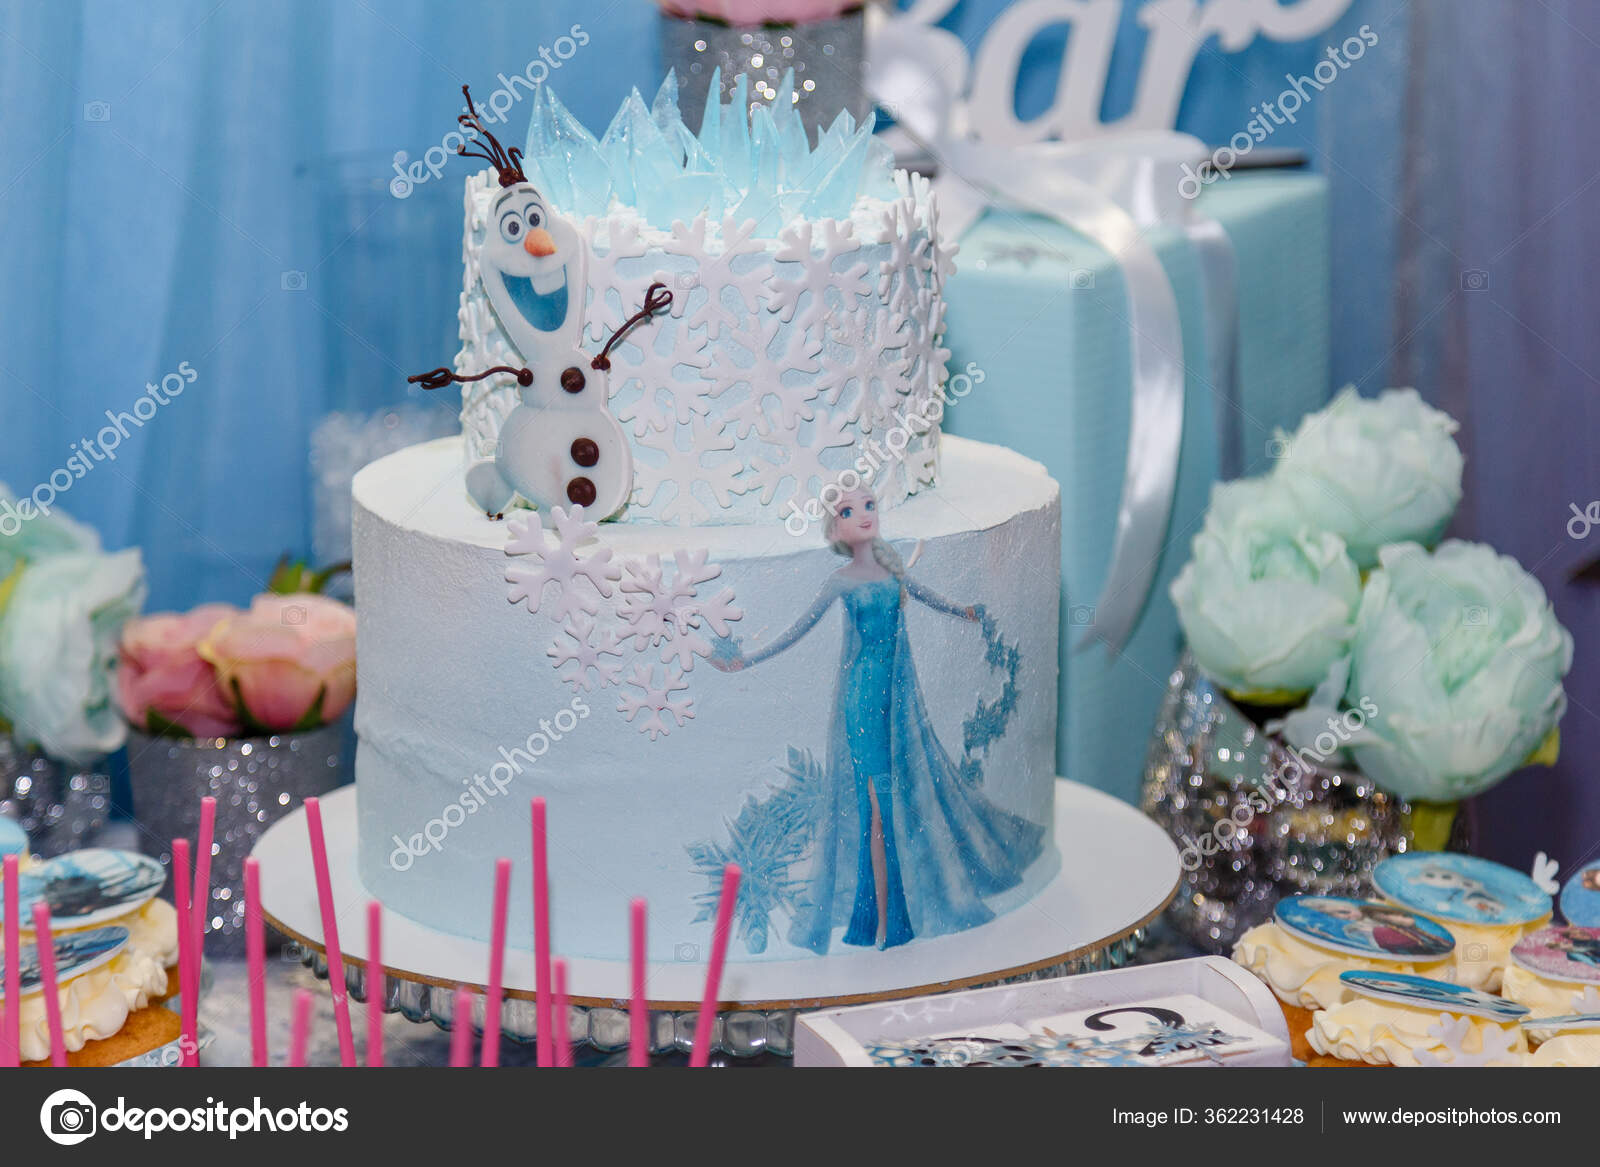 Izmail Ukraine February 2019 Candy Bar Birthday Cake Girl Frozen – Stock  Editorial Photo © ElenaSeiryk #362231428